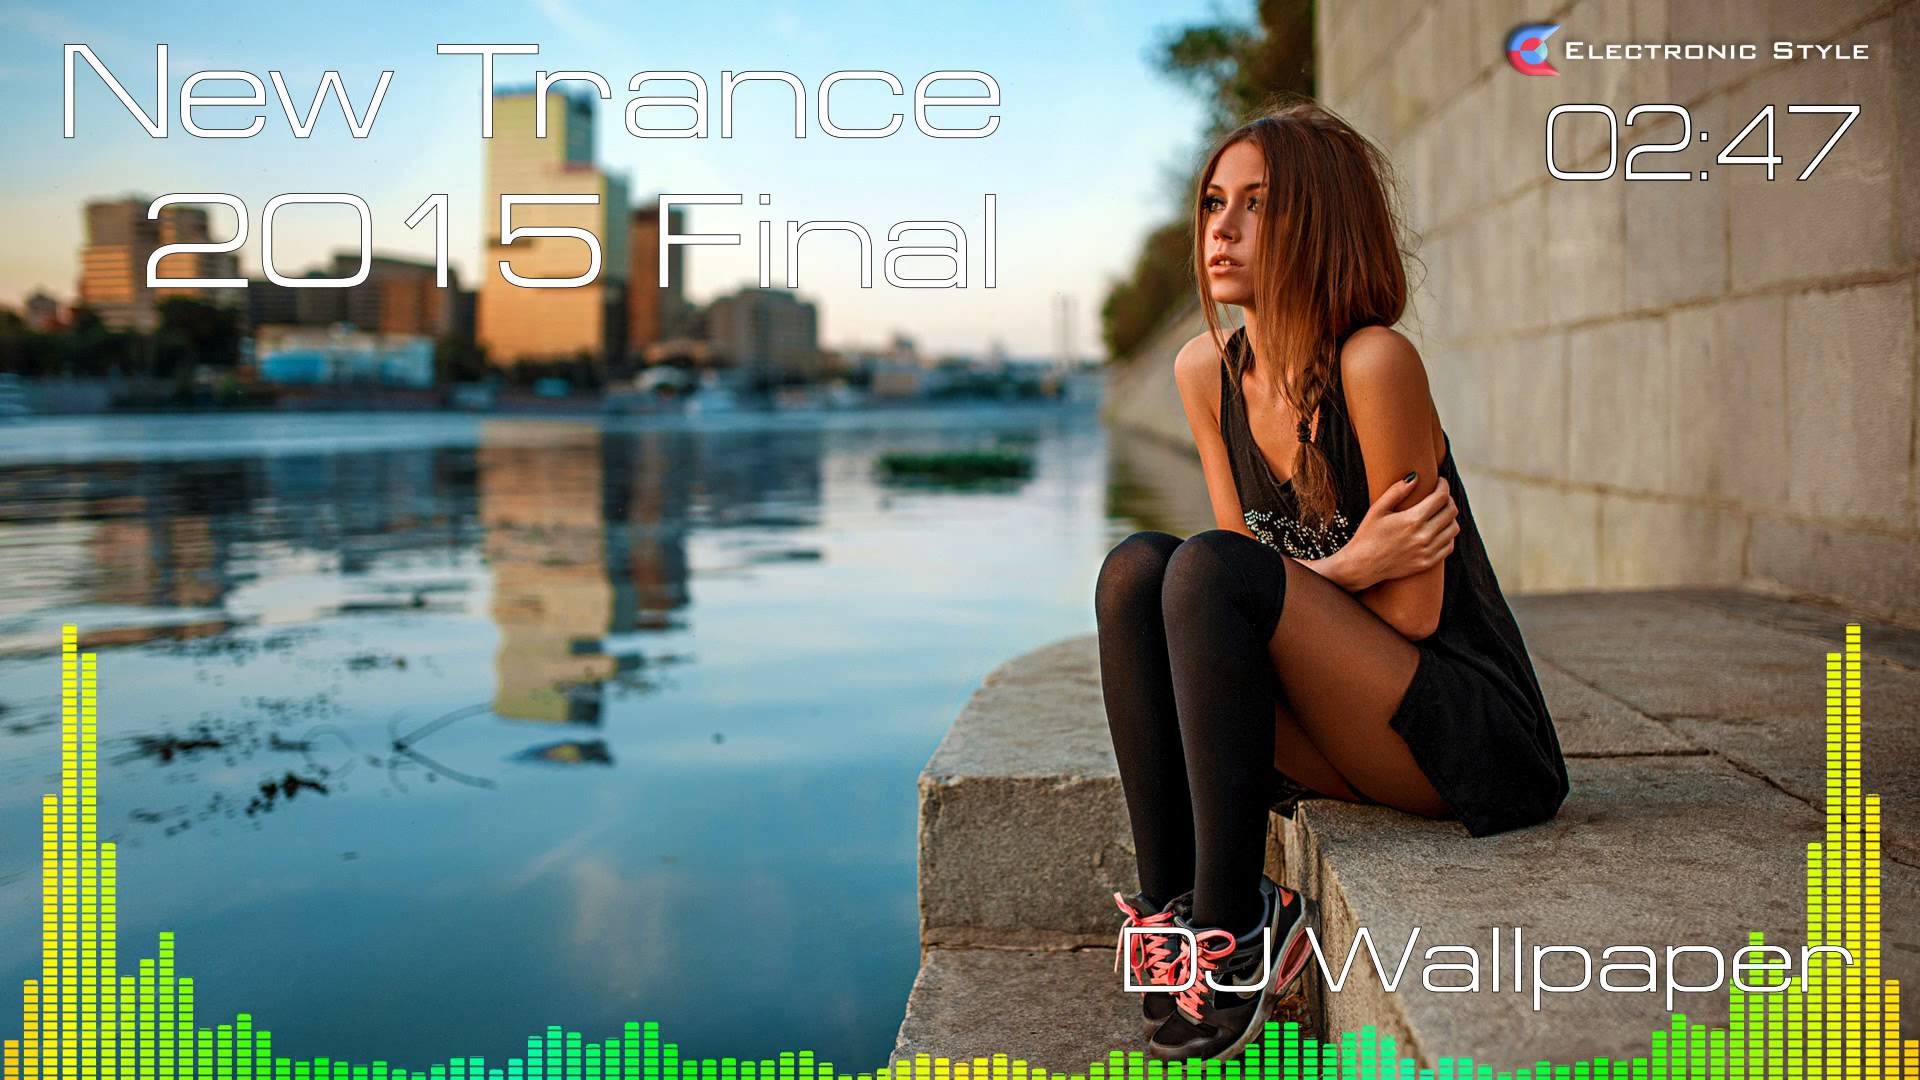 1920x1080 DJ Wallpaper - New Trance 2015 Final [Electronic Style]